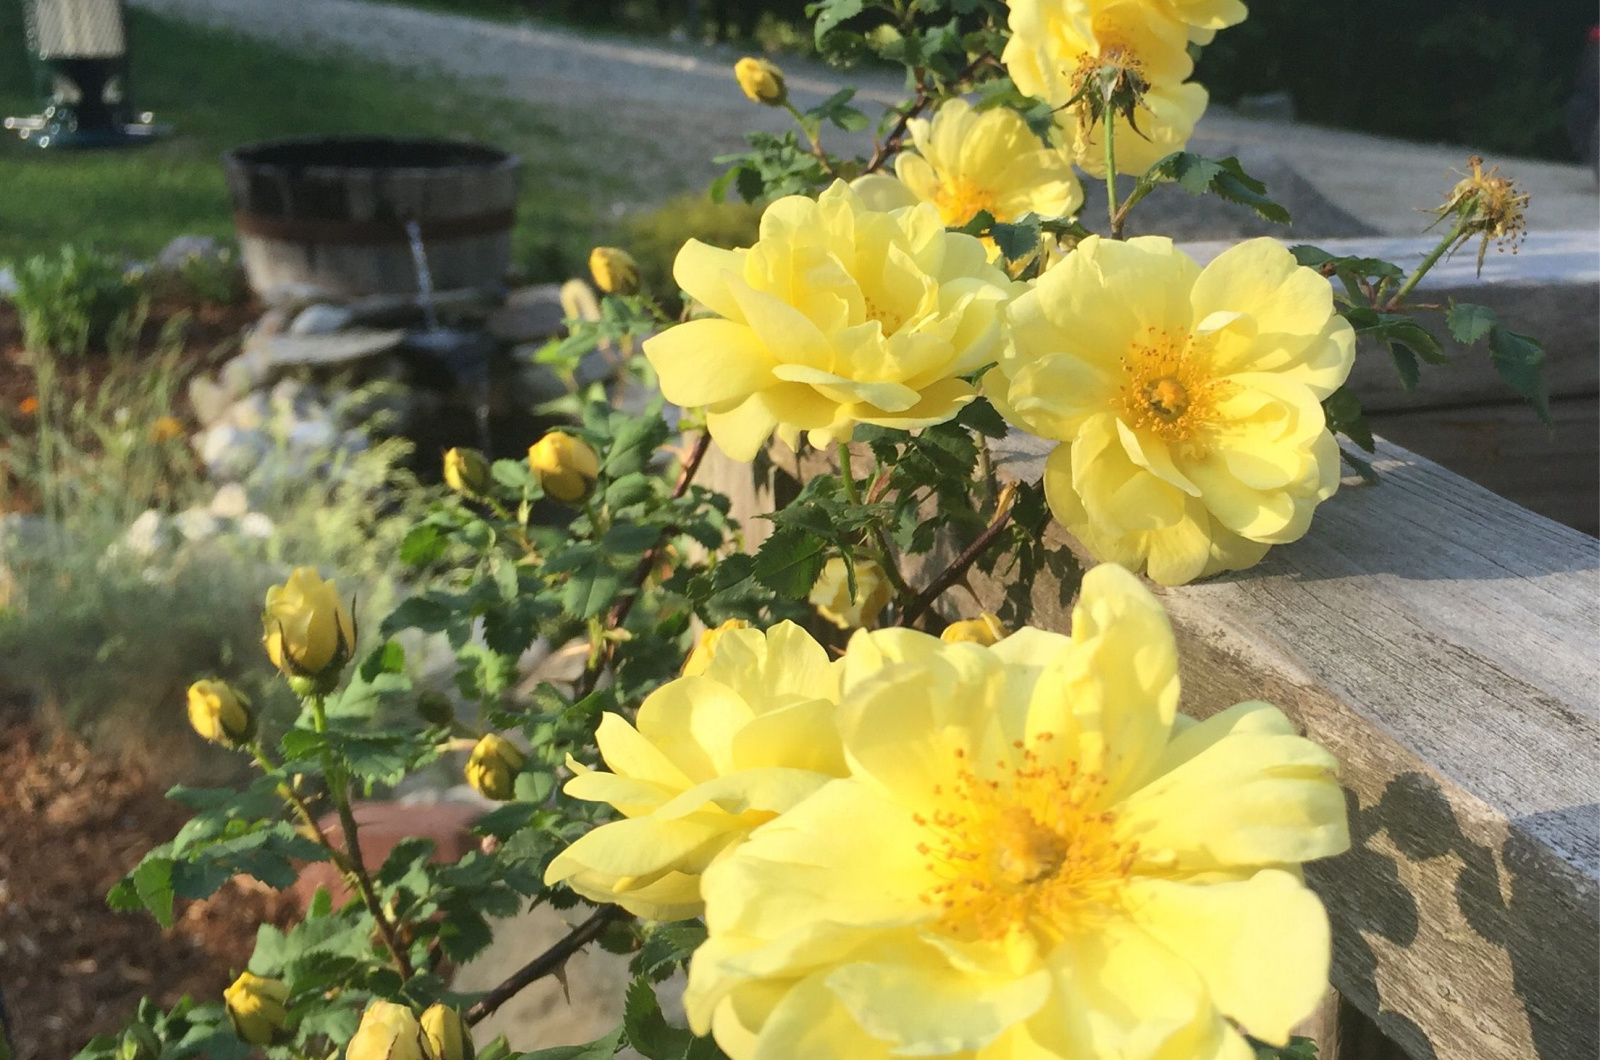 Harrison’s Yellow rose in a garden